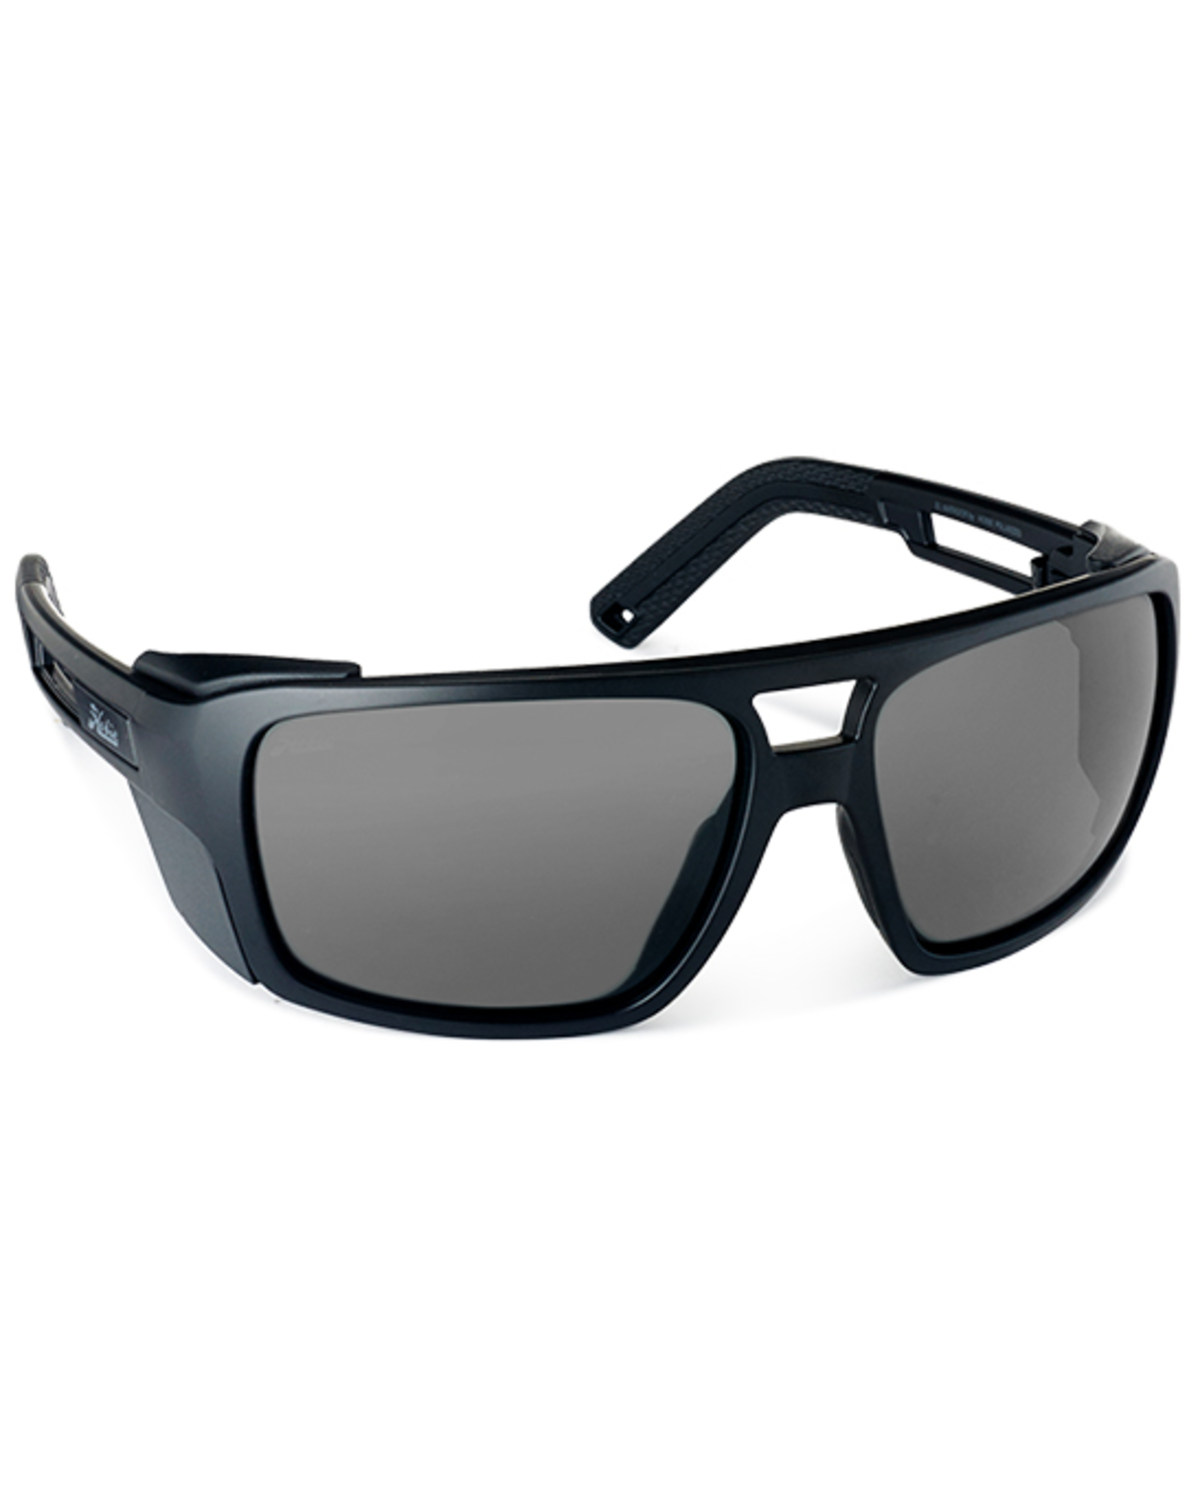 Hobie Men's El Matador Black & Gray Satin Frame Polarized Sunglasses